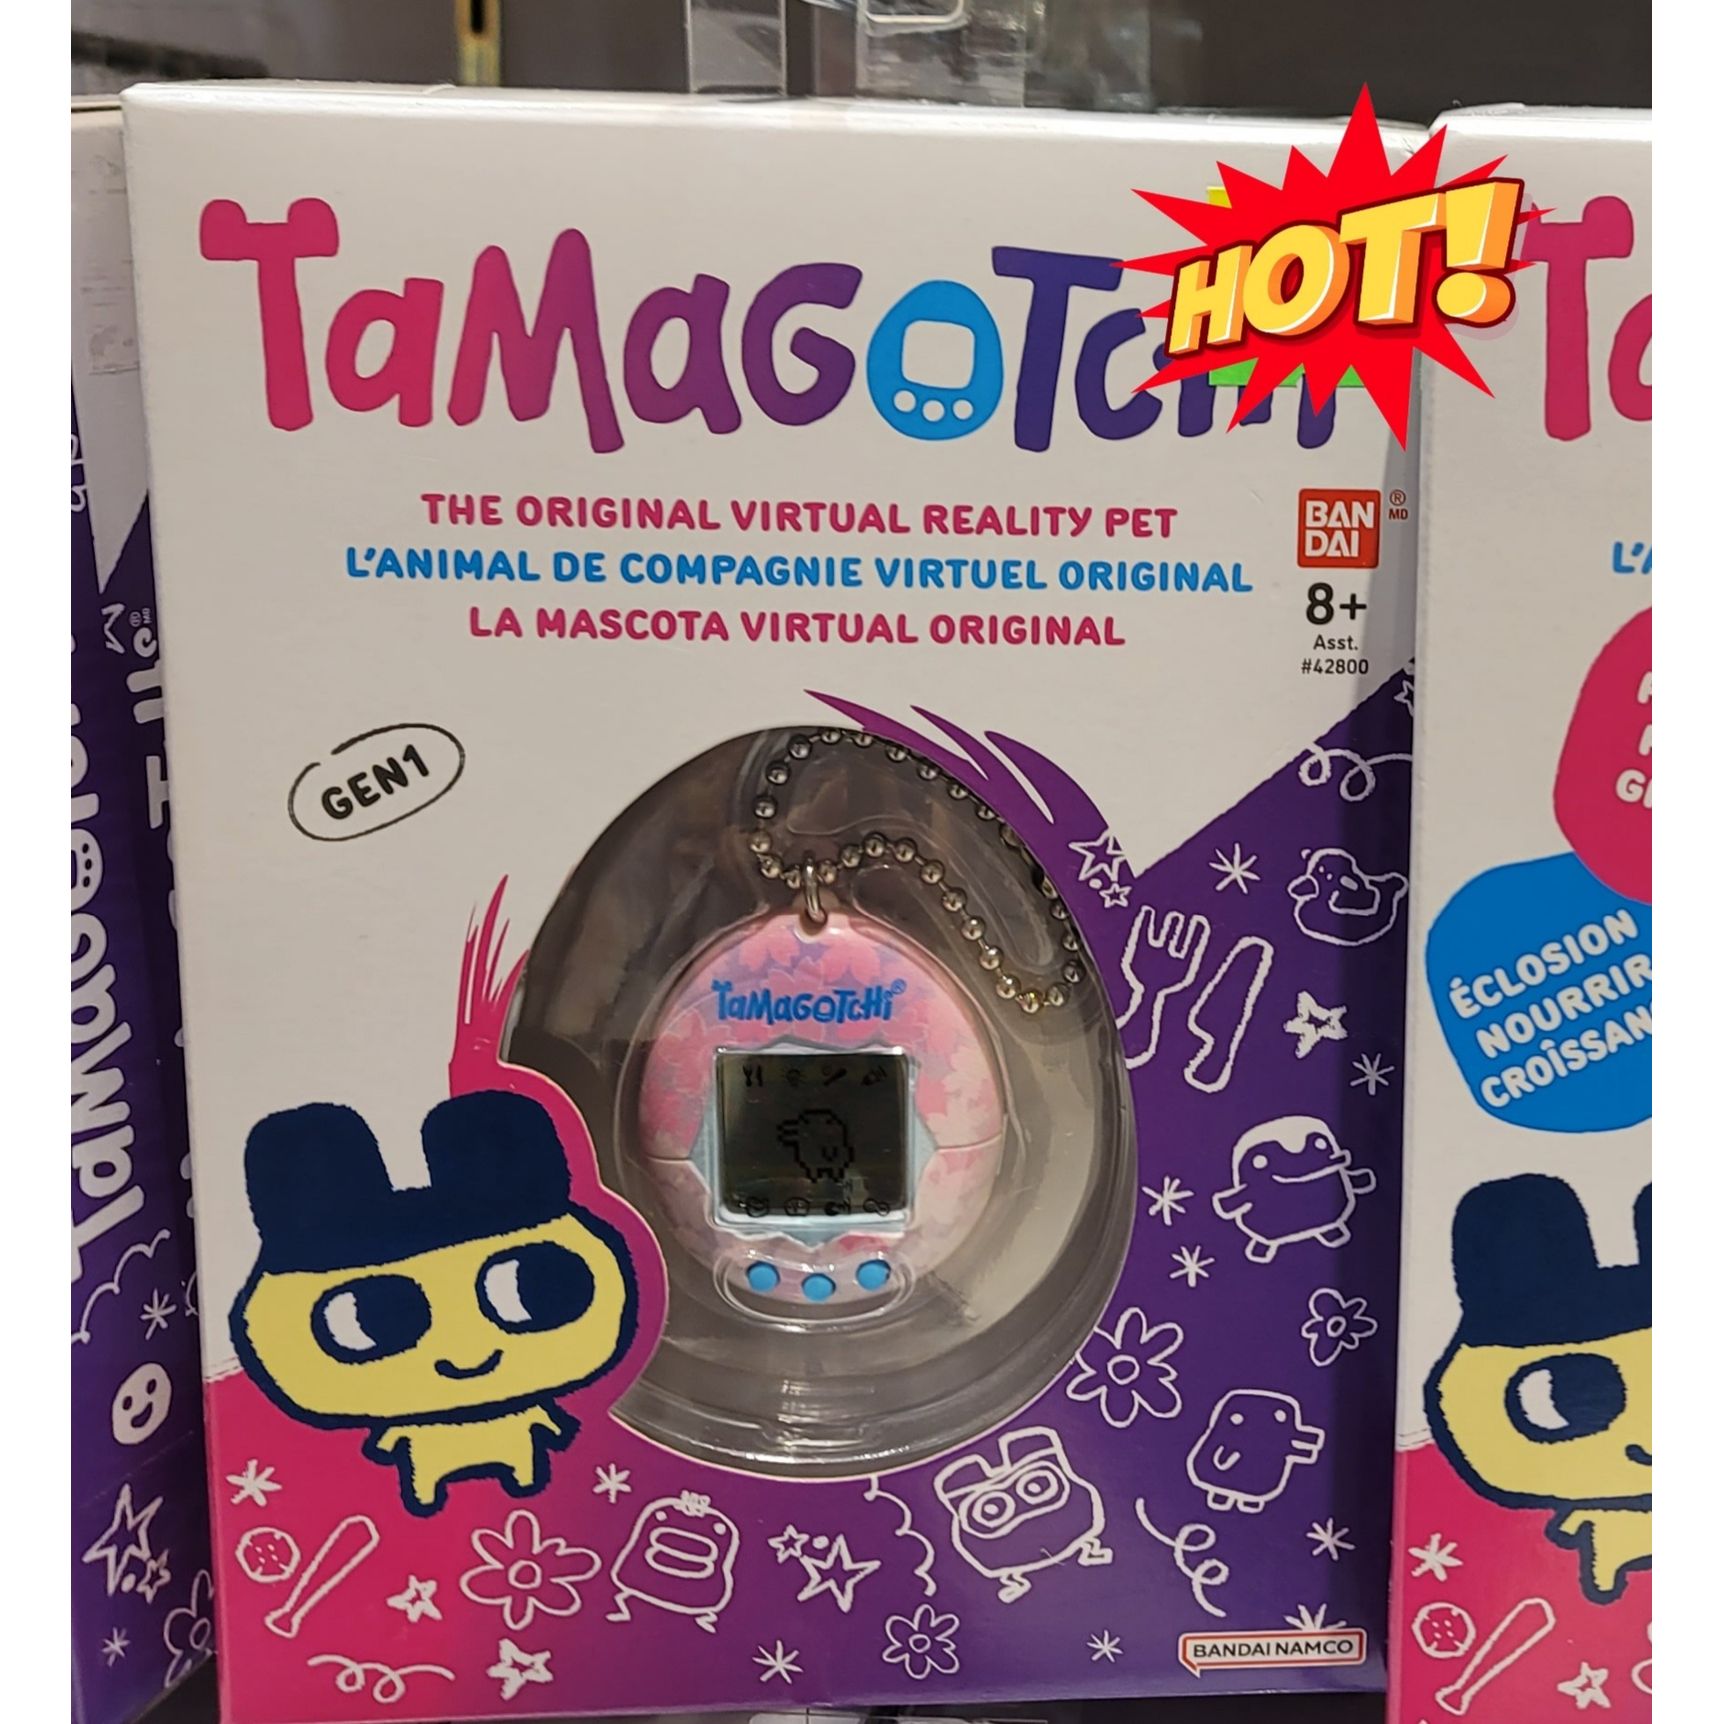 Tamagotchi - Sakura - Animal de compagnie électronique virtuel